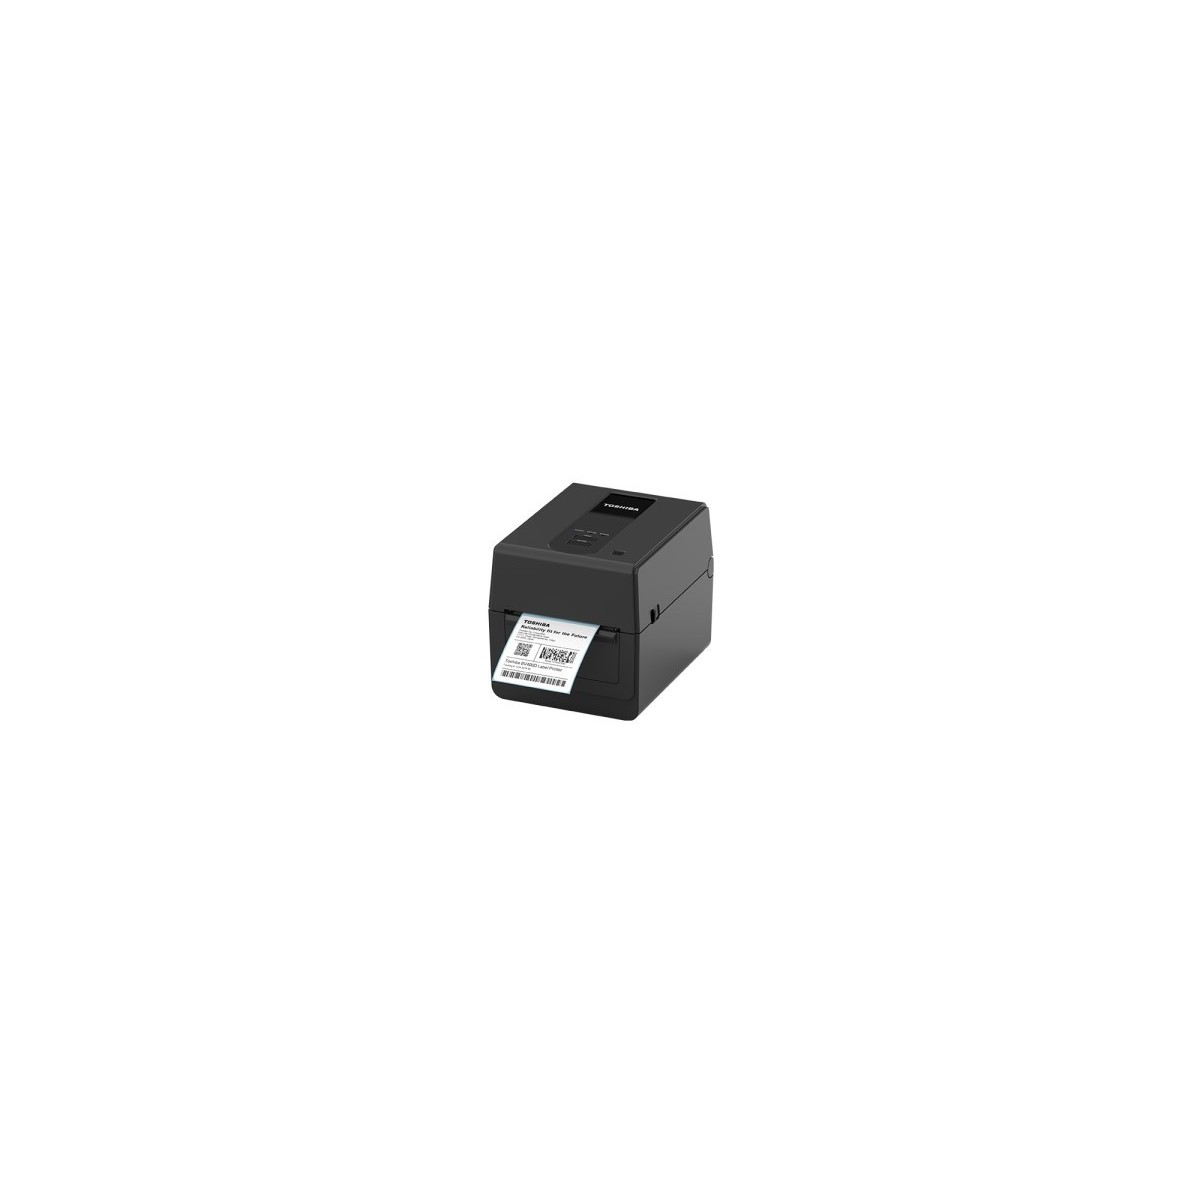 Toshiba BV420T-GS02-QM-S - Etikettendrucker thermotransfer 203dpi USB+ Ethernet - Label Printer - 203 dpi